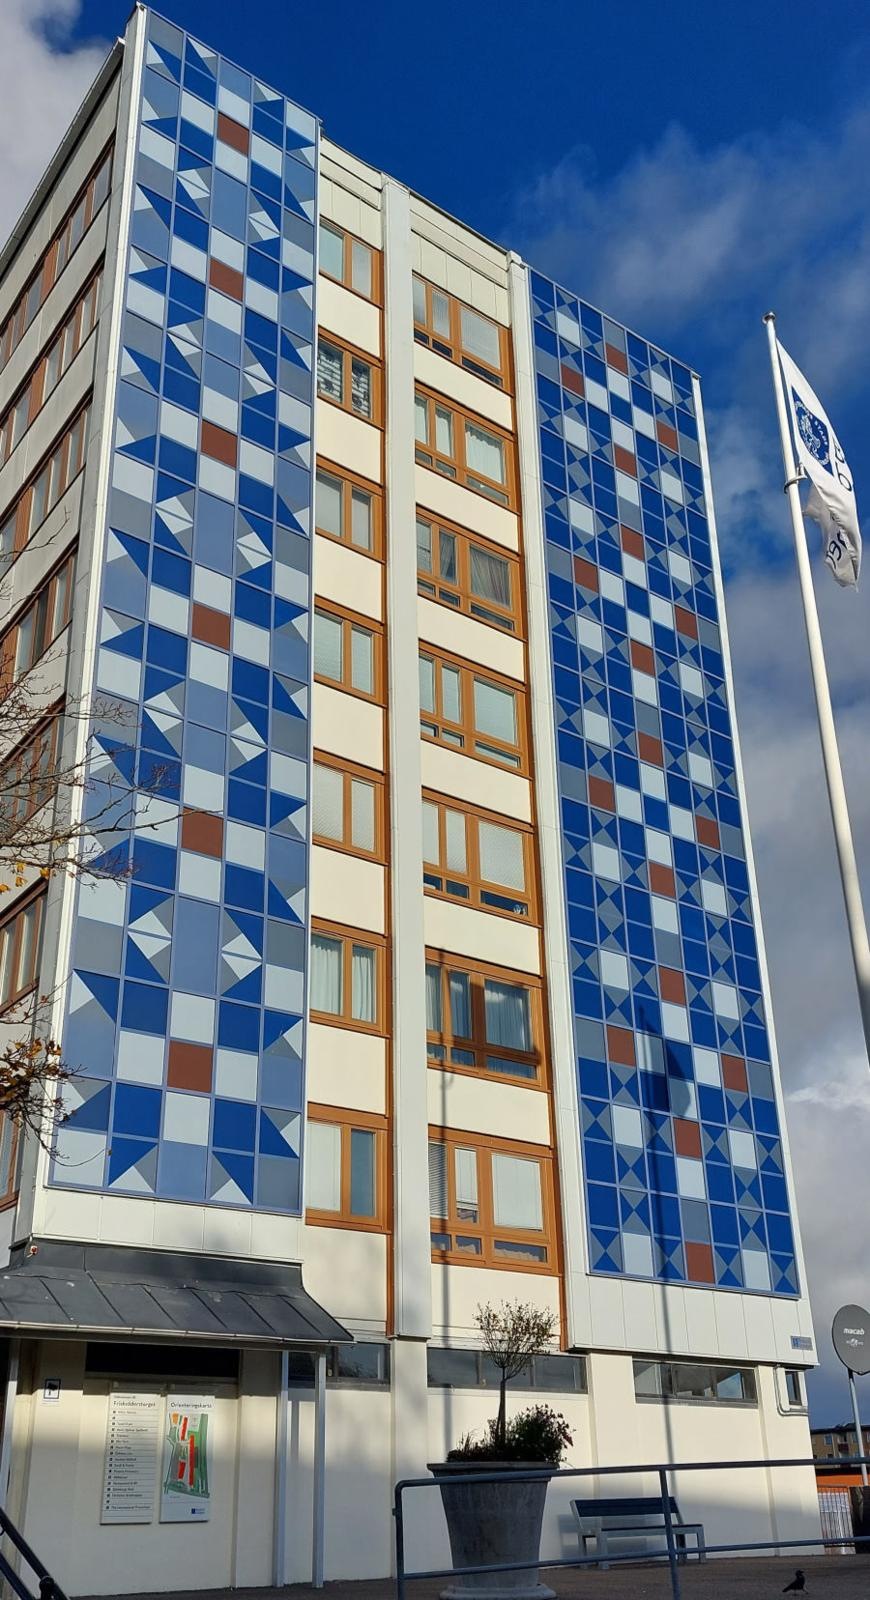 Friskväderstorget facility in Gothenburg with BIPV modules in a mosaic design.